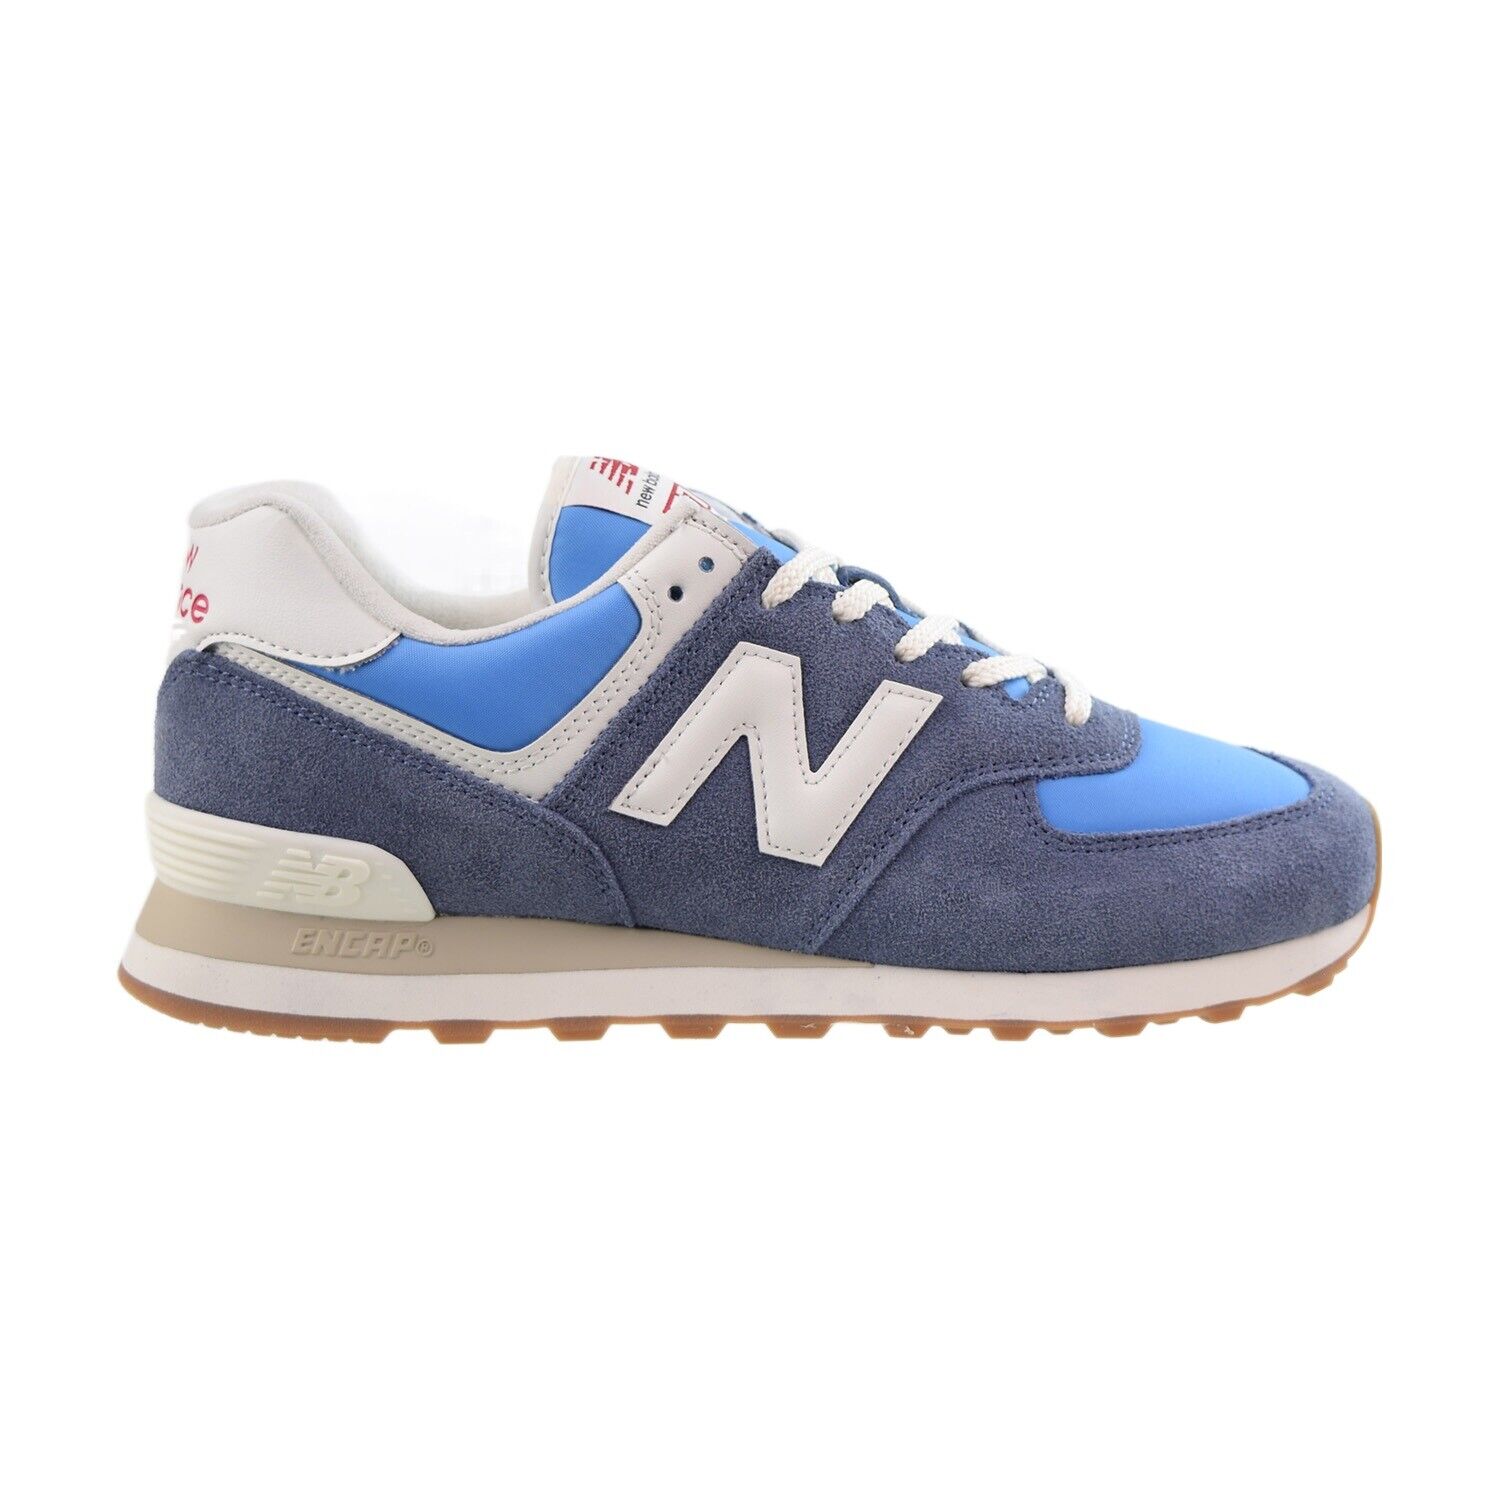 New Balance 574 Men's Shoes Blue-White Gum U574-RA2 | eBay